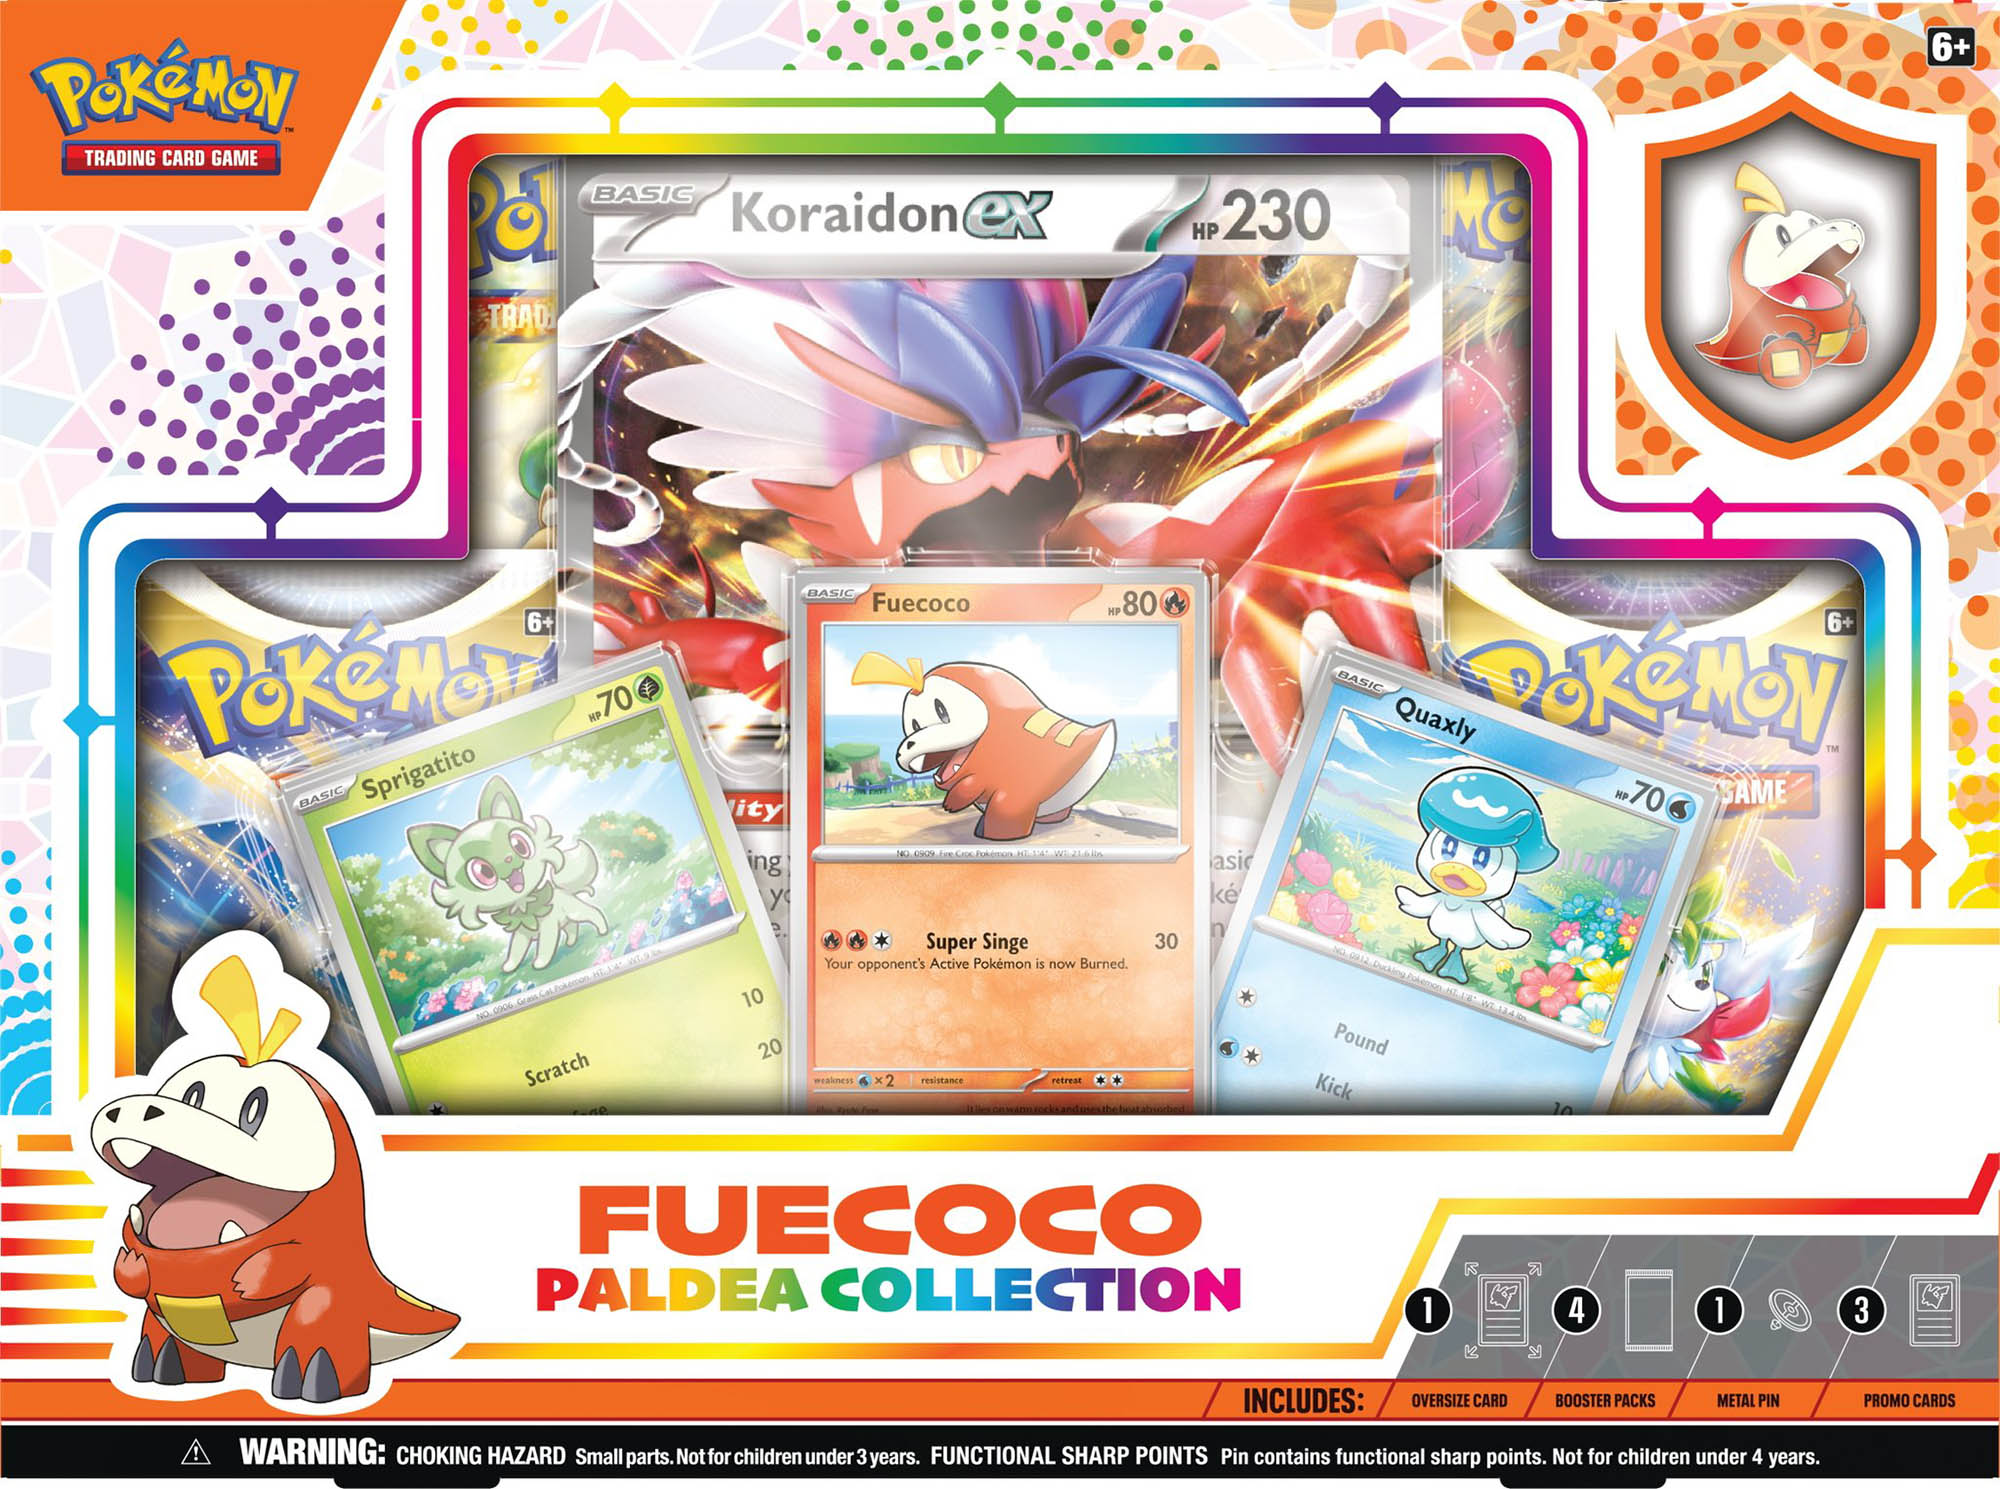 Pokemon Paldea Collection Box - Fuecoco with Koraidon